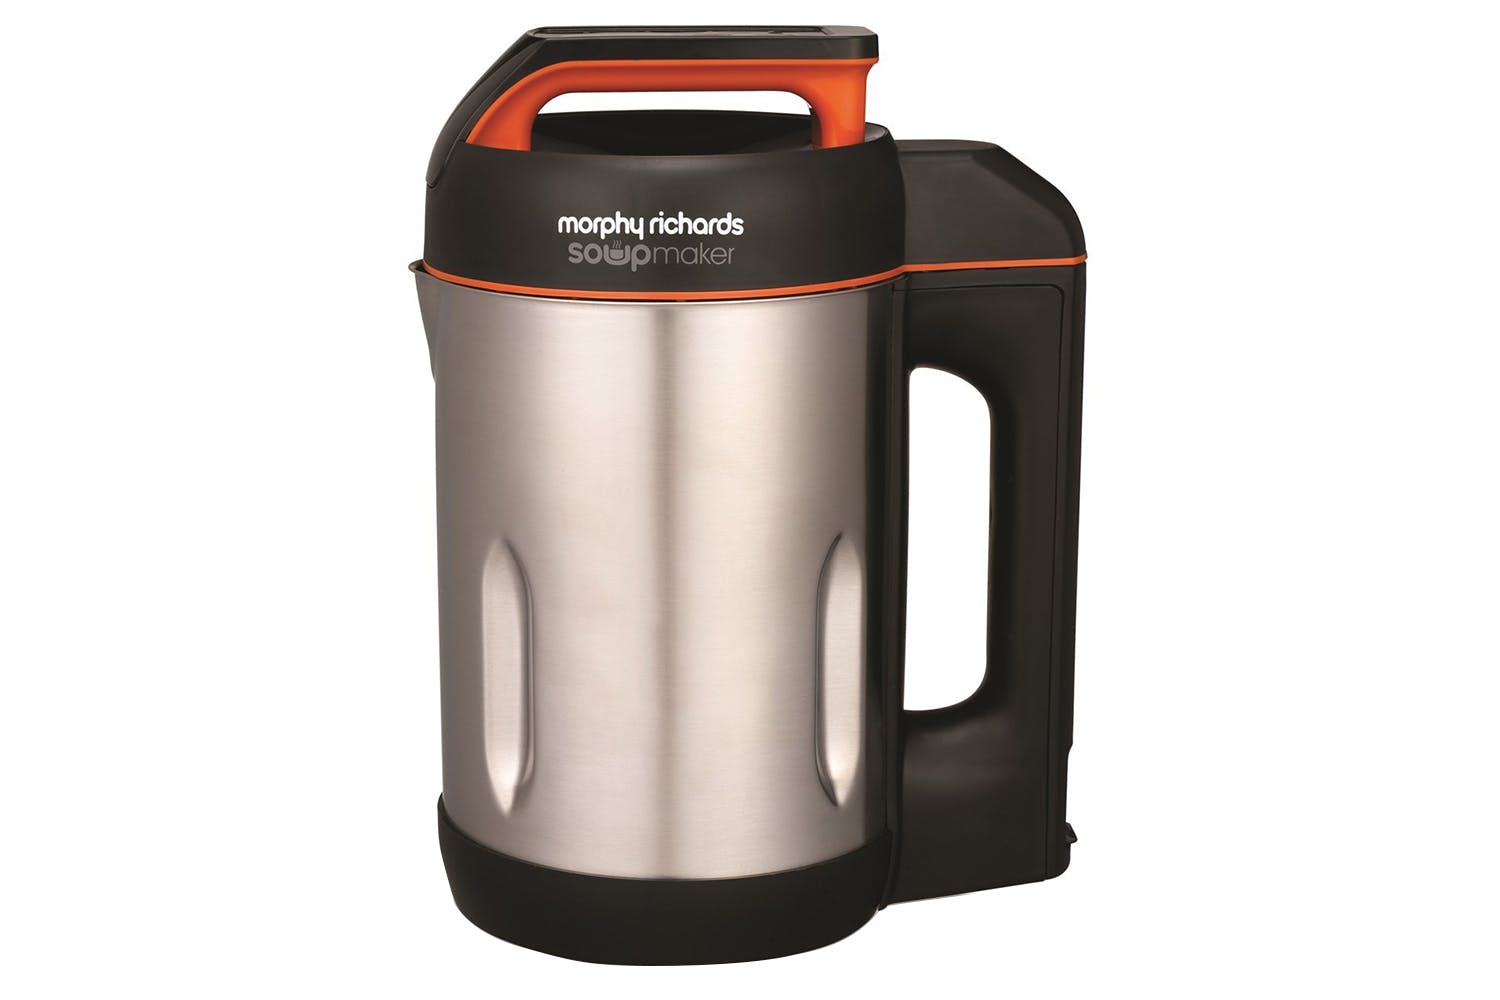 Soup Maker Morphy Richards Soupmaker Stainless Steel Blender 4 Functions 1.6L 